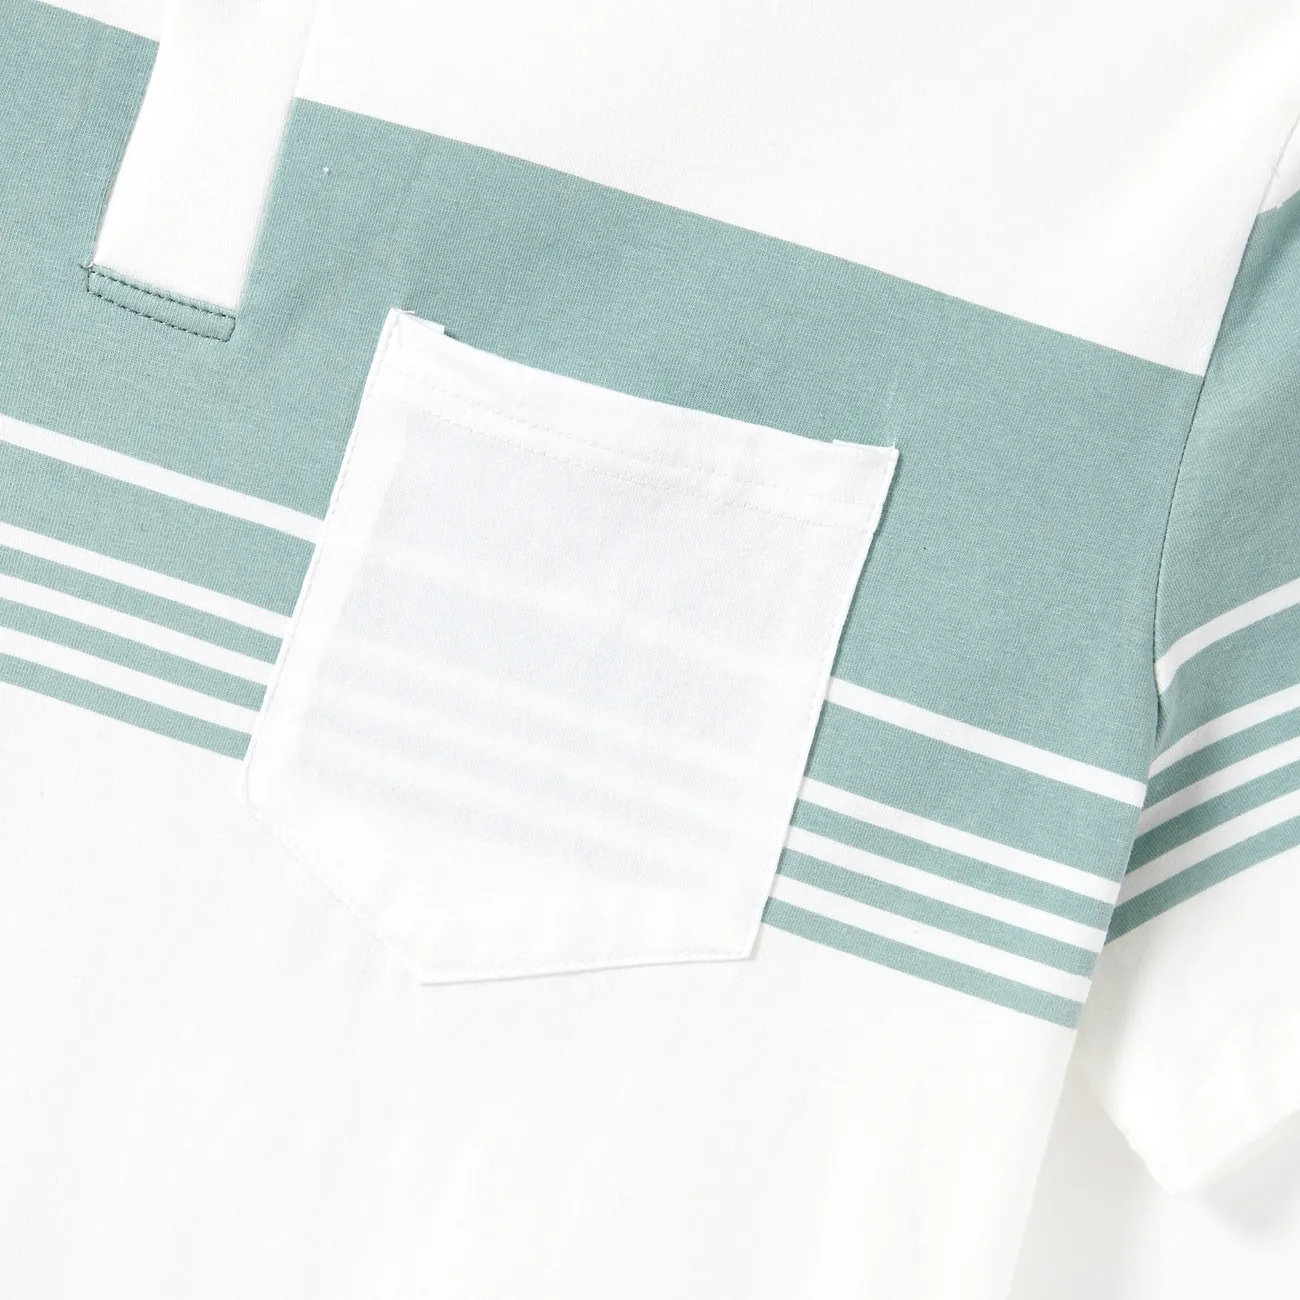 Family Matching Color Block Polo Shirt and Irregular Dot Pattern Halter Ruffle Hem Dress Sets GrayGreen big image 1